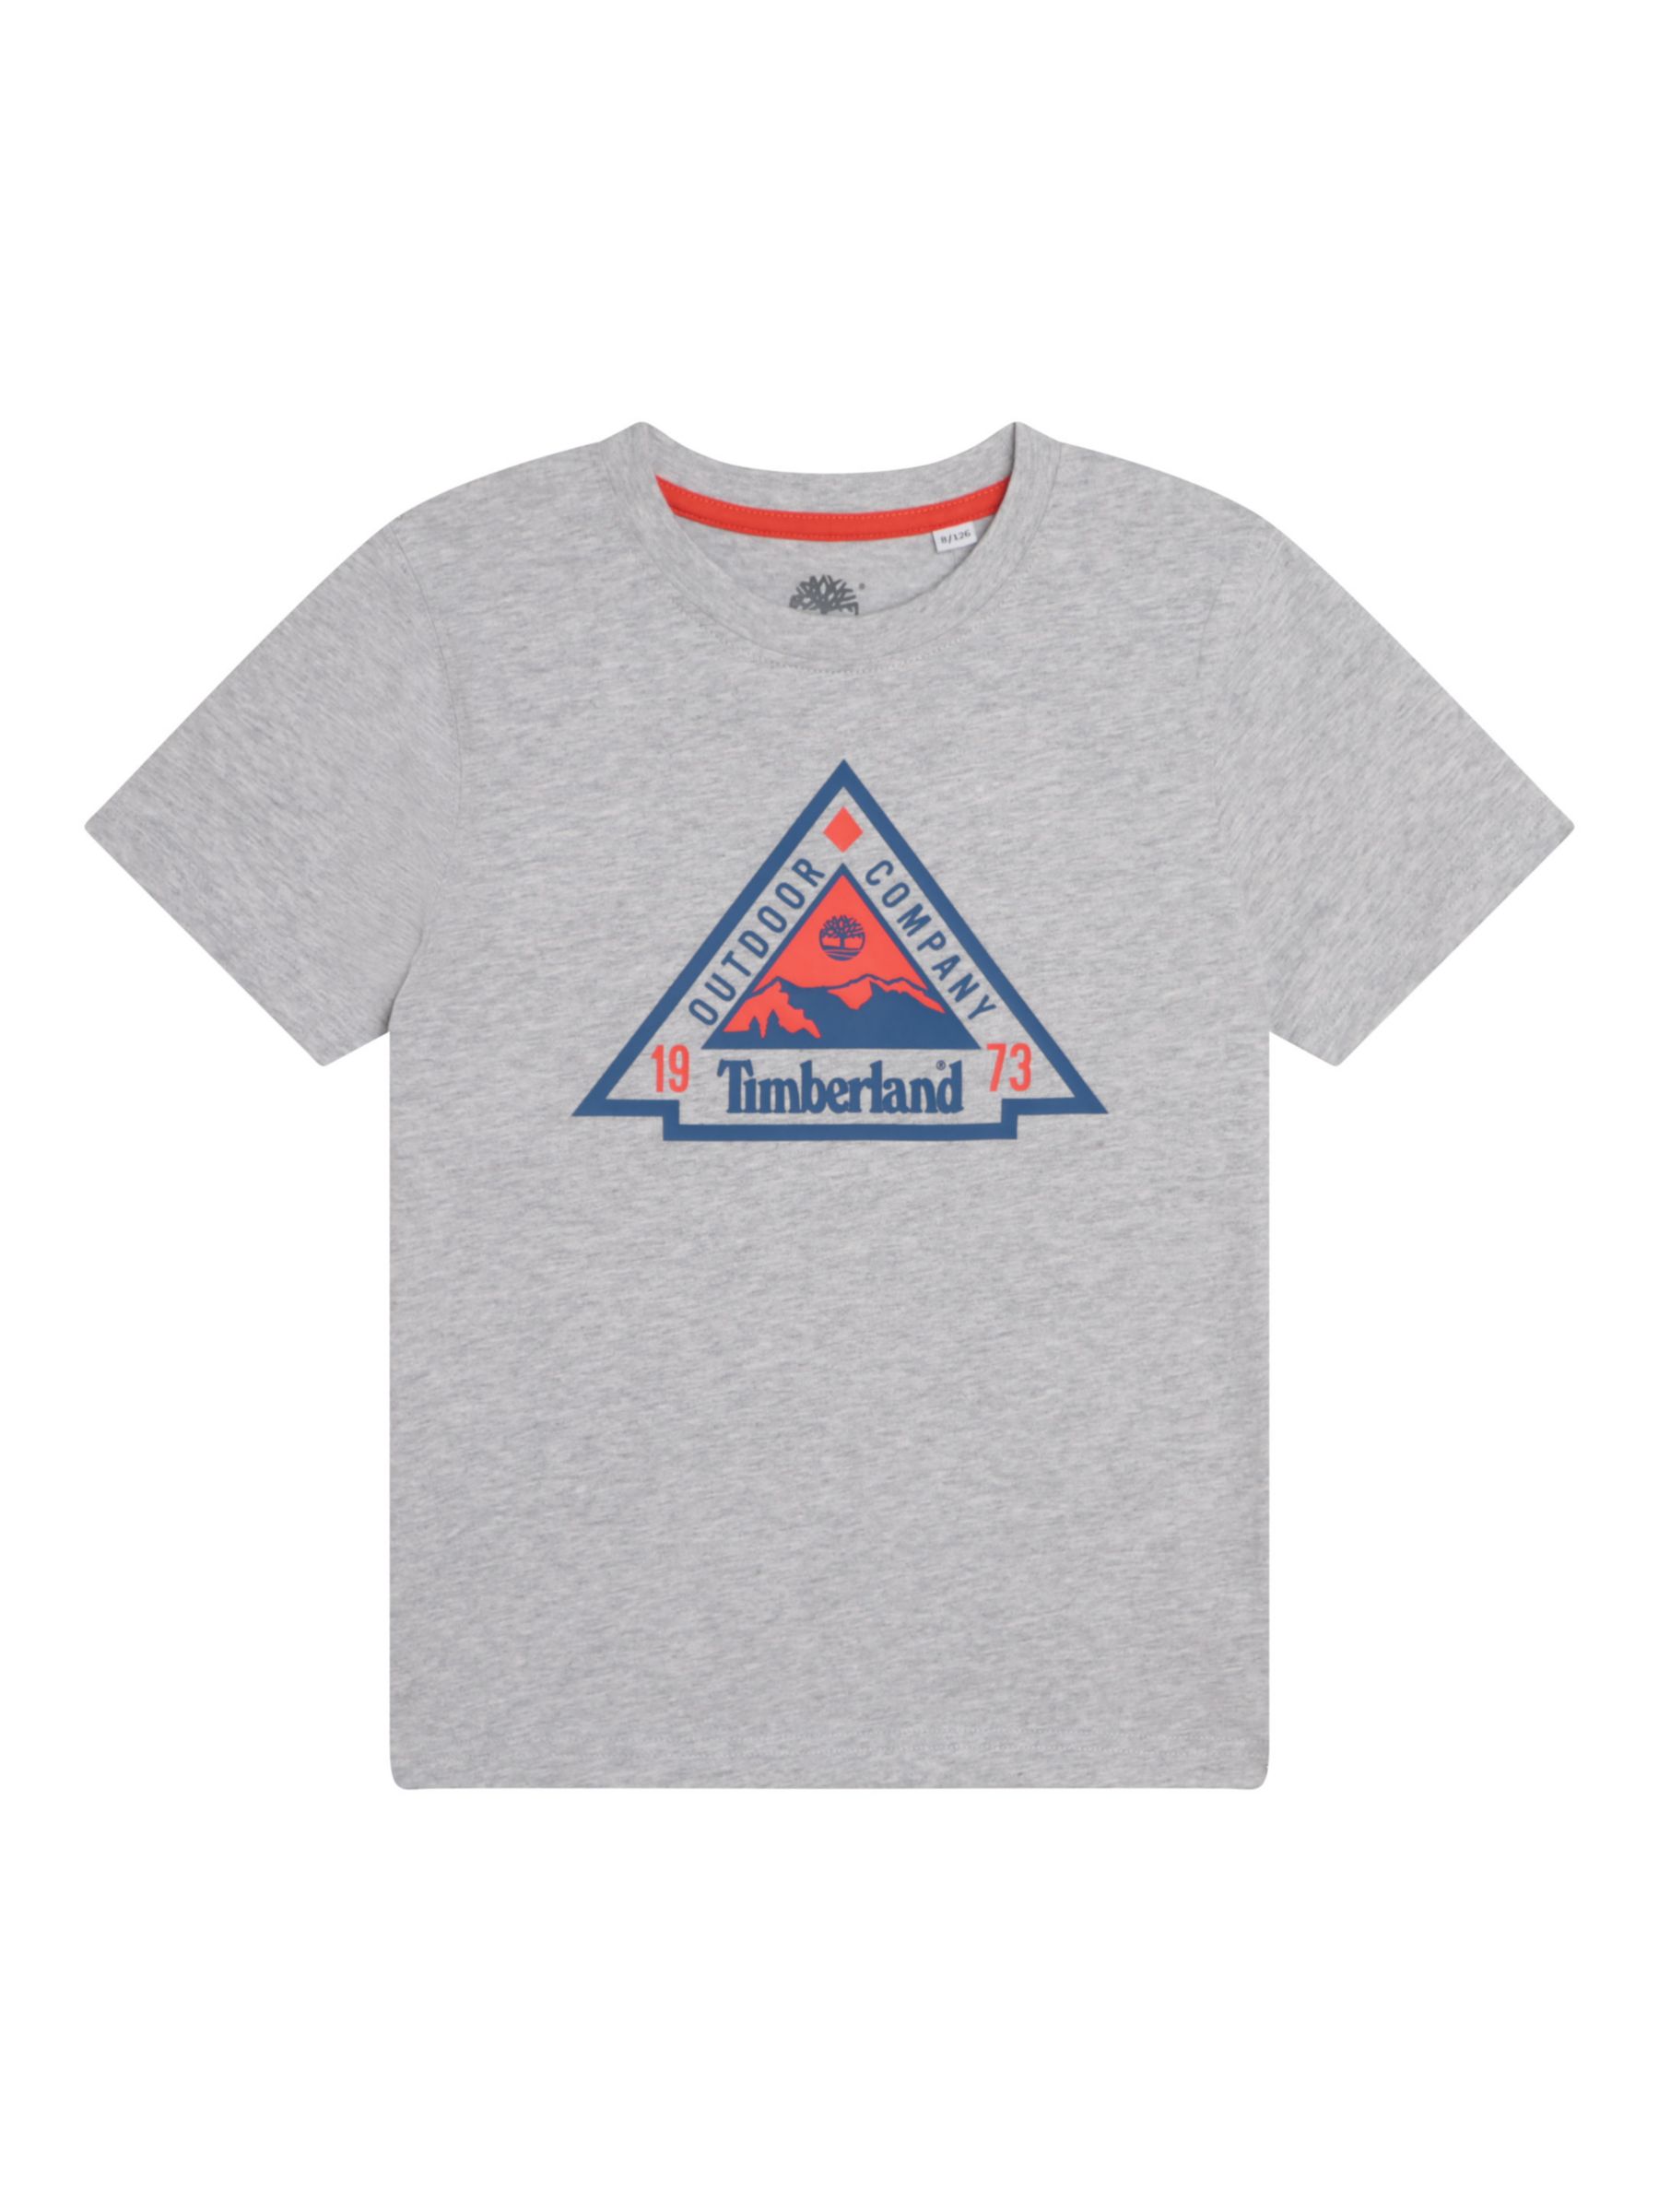 Timberland Kids' Triangle Graphic T-Shirt, Light Grey